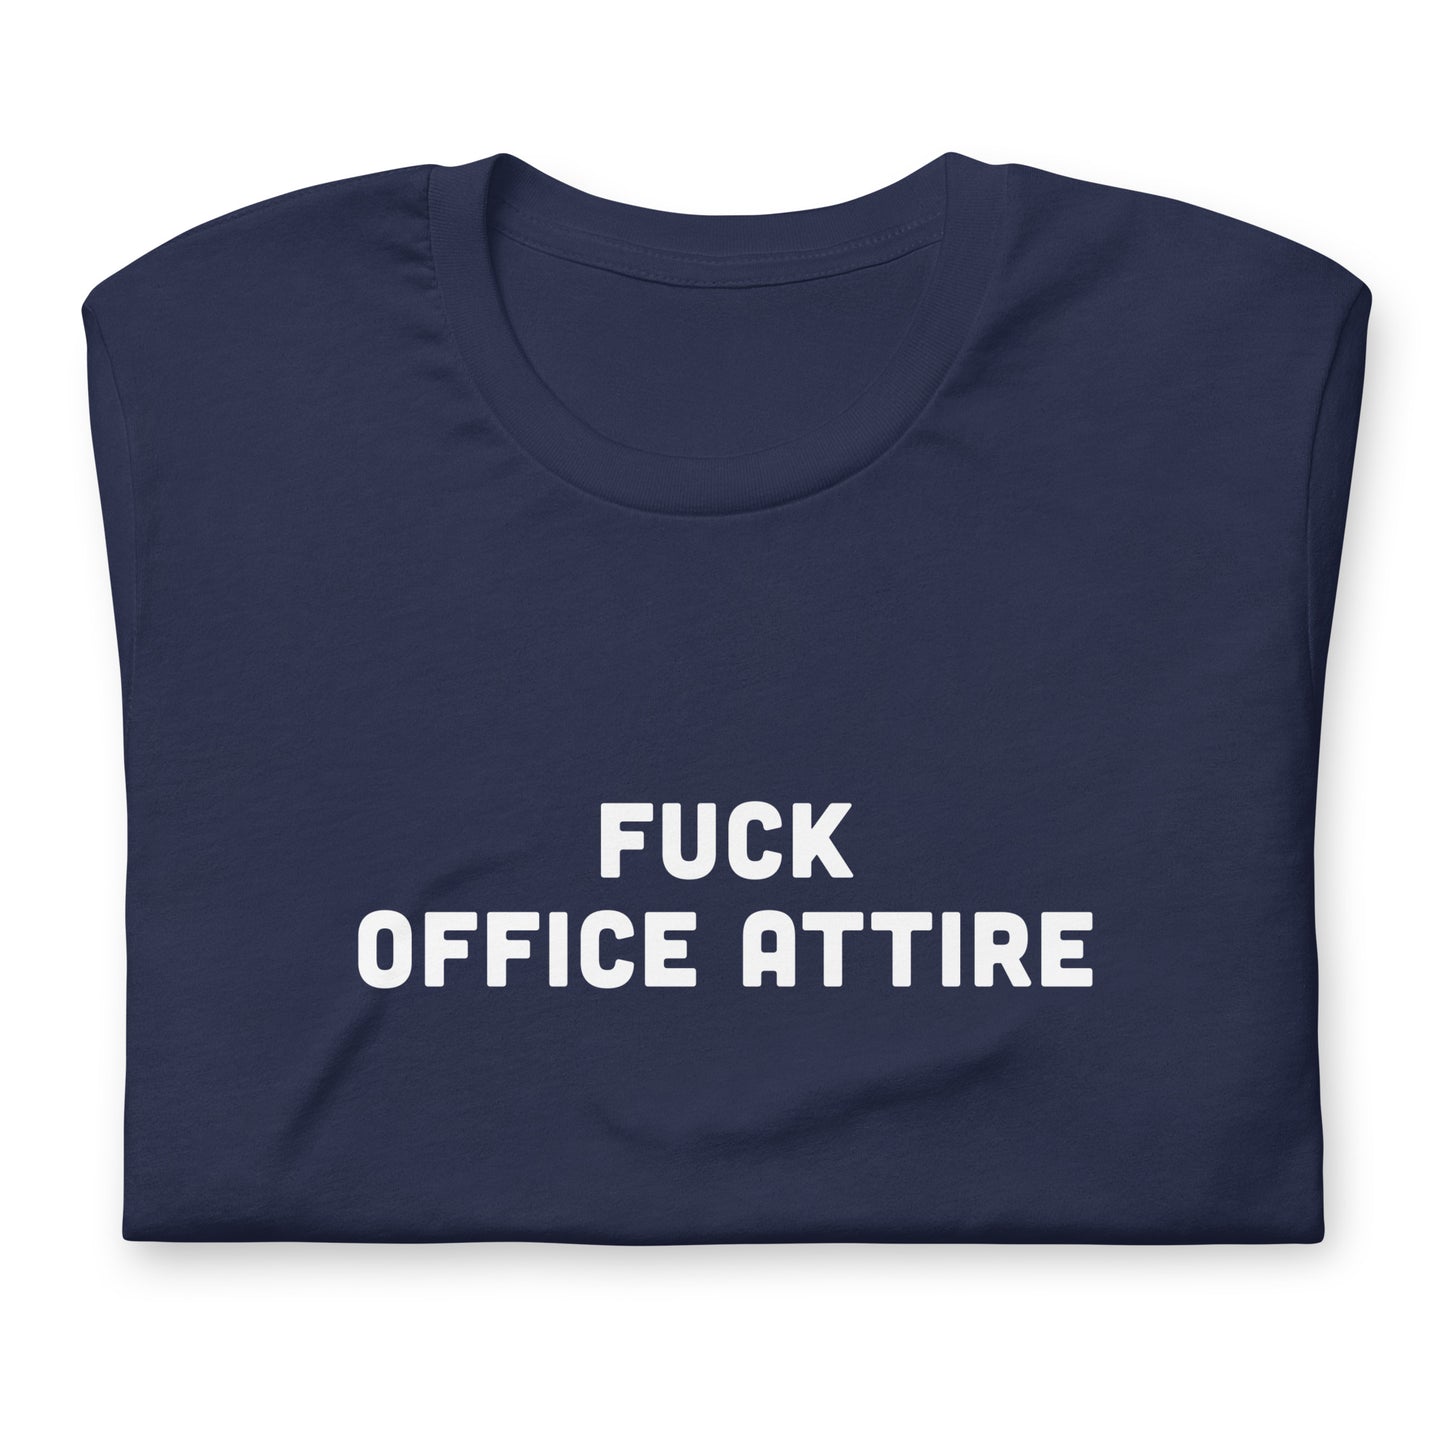 Fuck Office Attire T-Shirt Size L Color Black